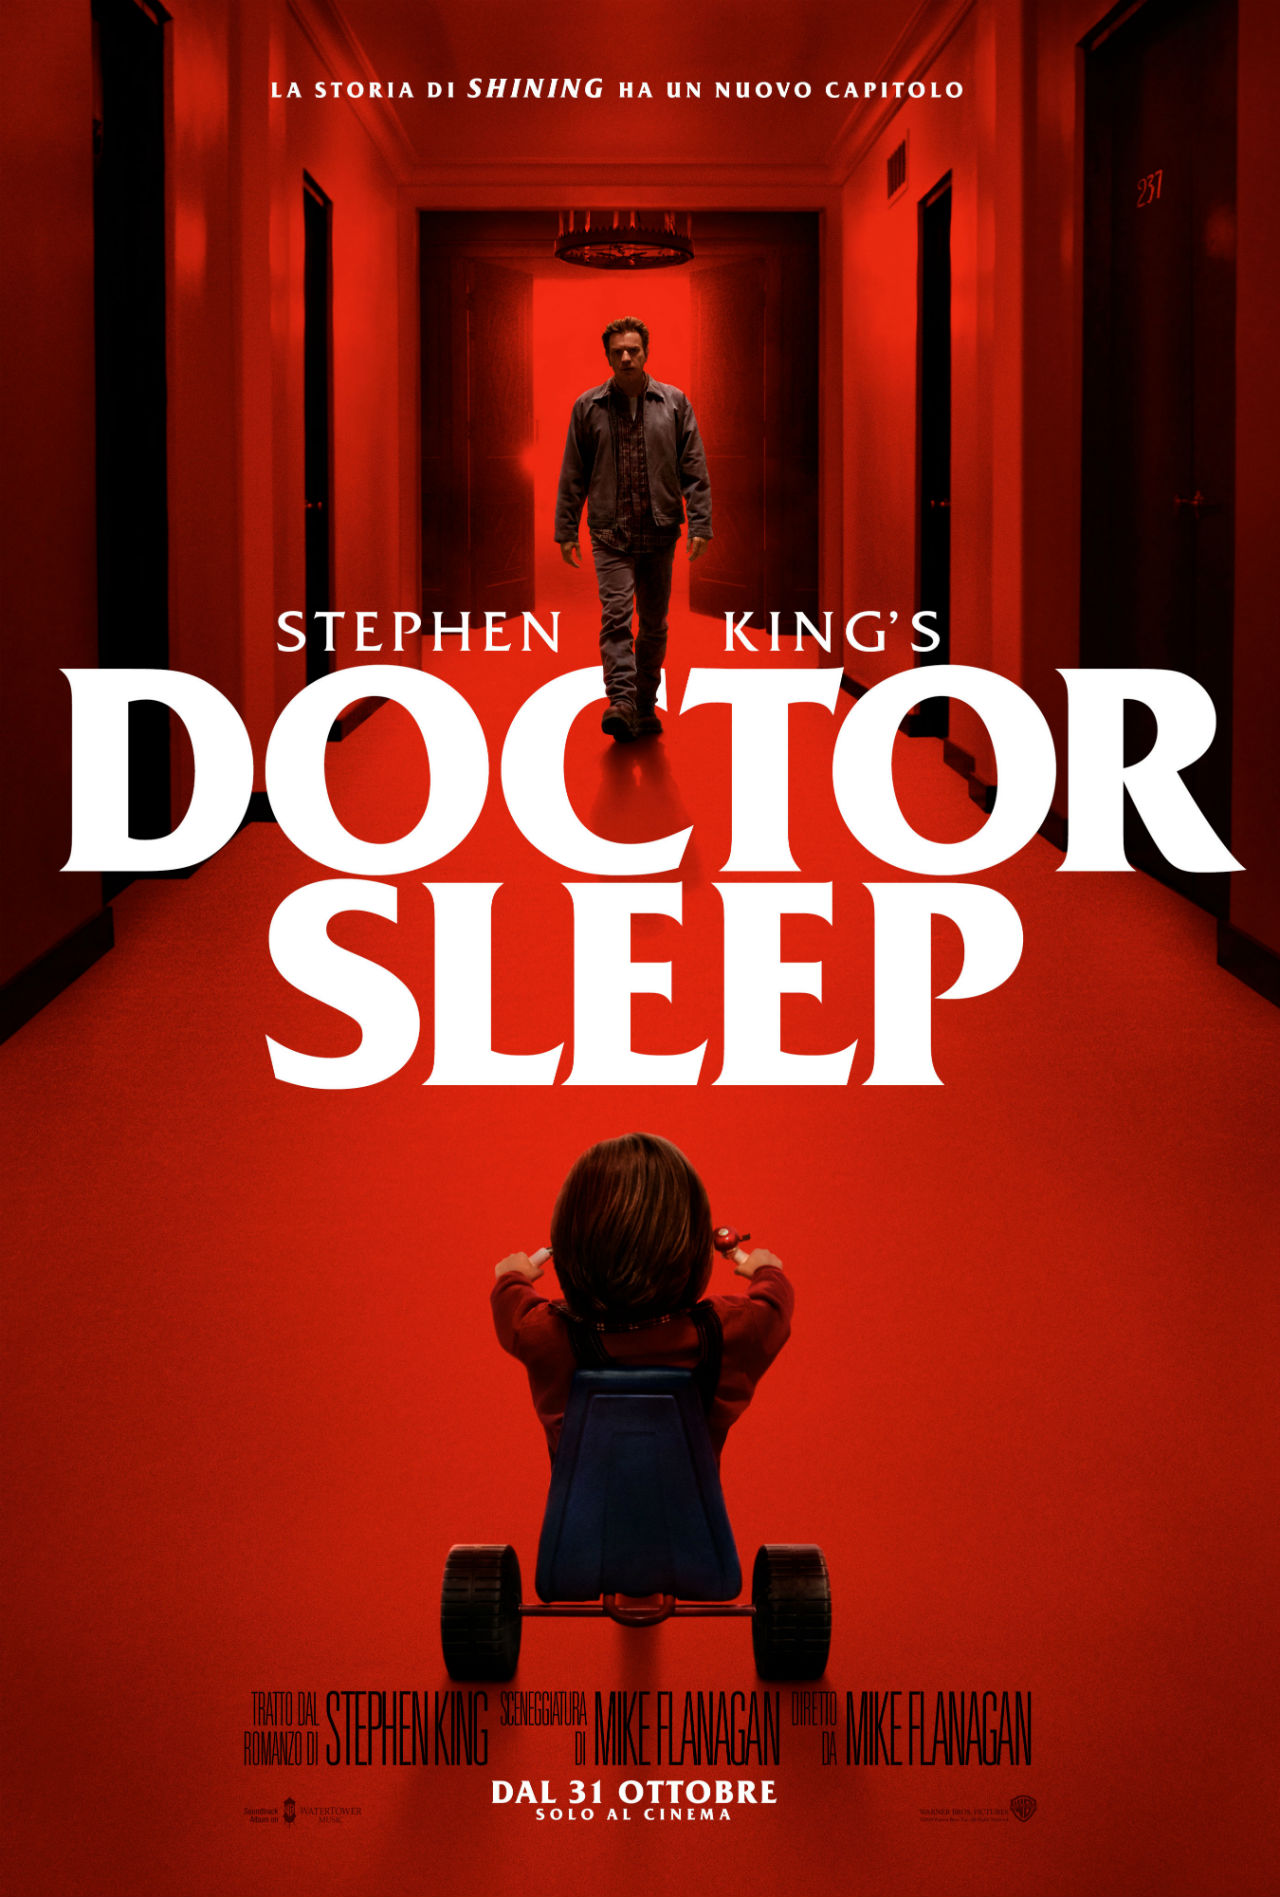 https://movieplayer.it/film/doctor-sleep_49484/